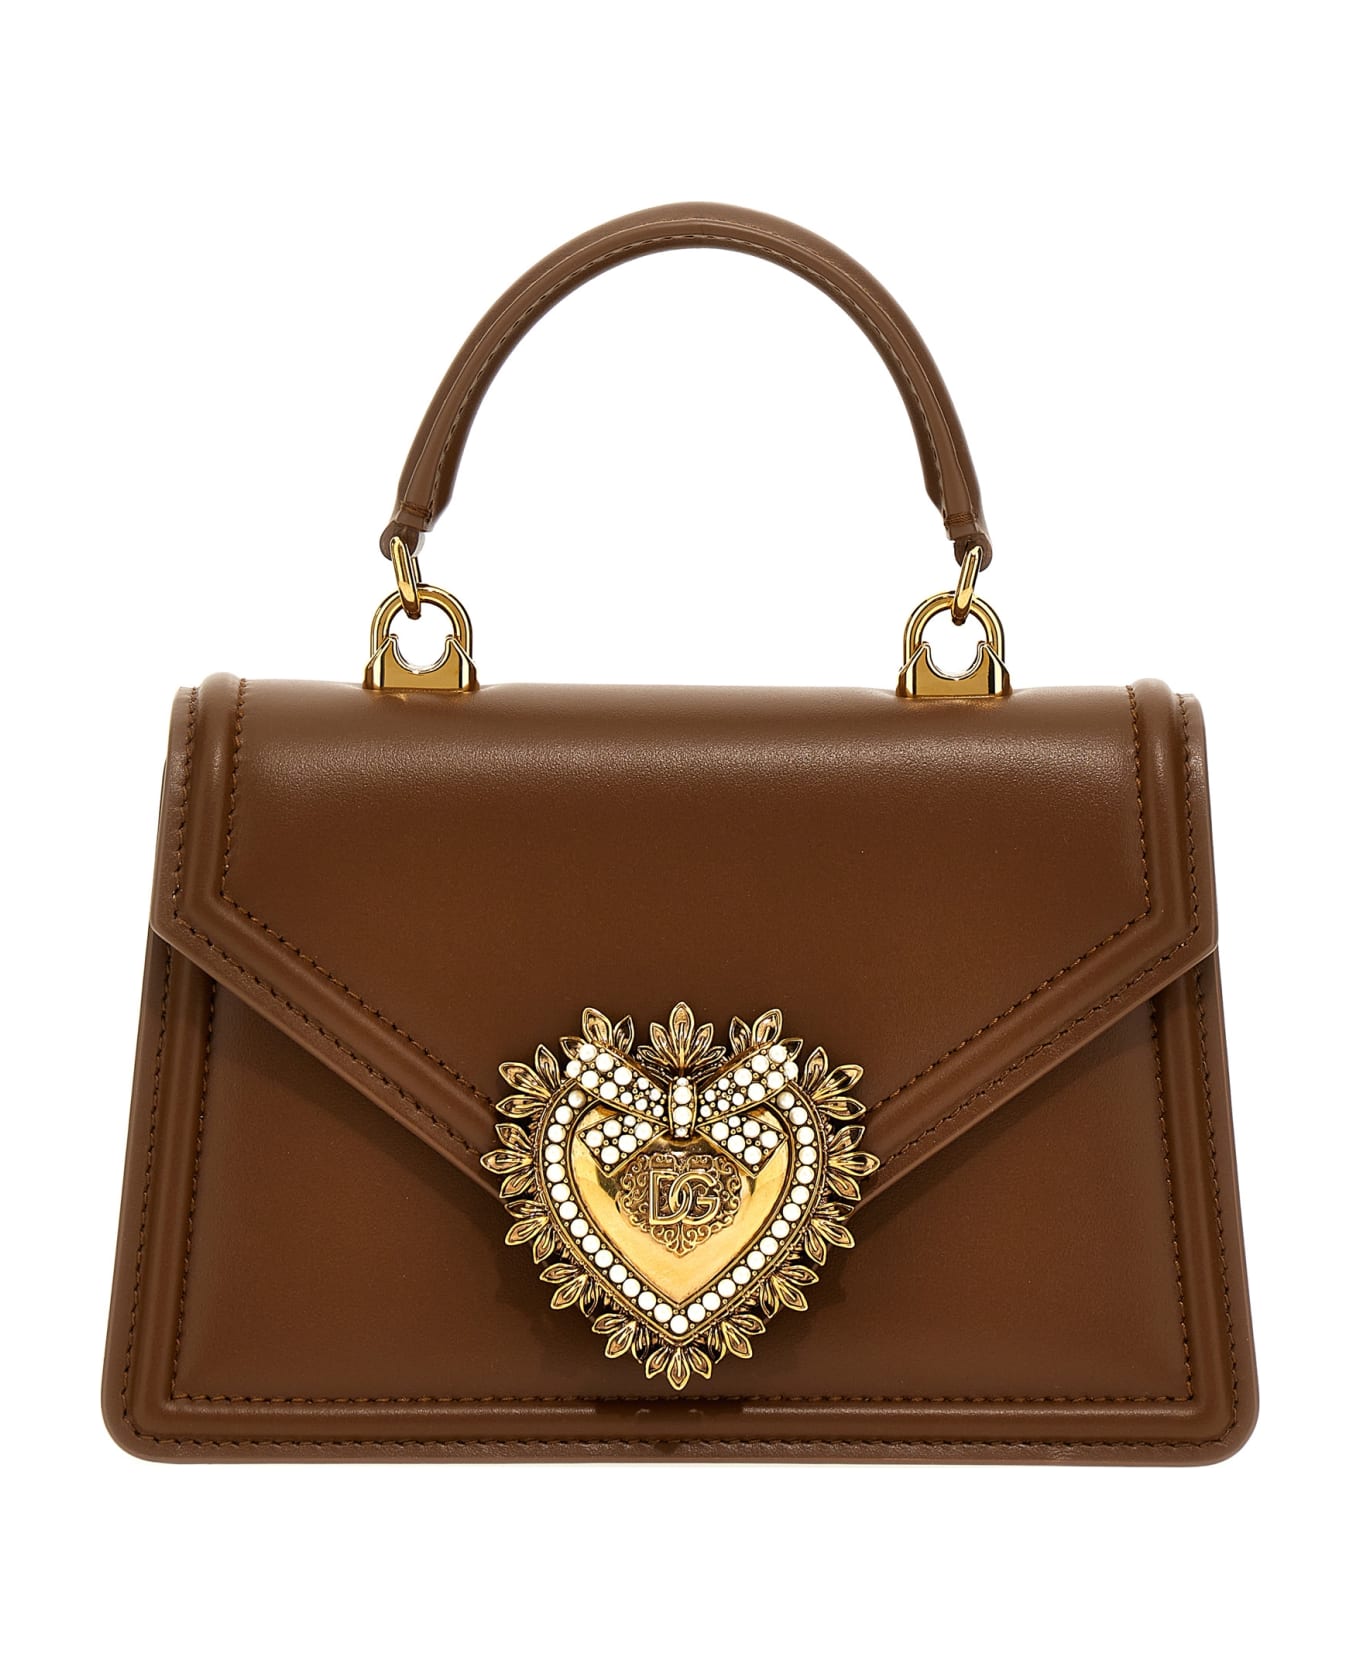 Dolce & Gabbana Devotion Bag - Brown